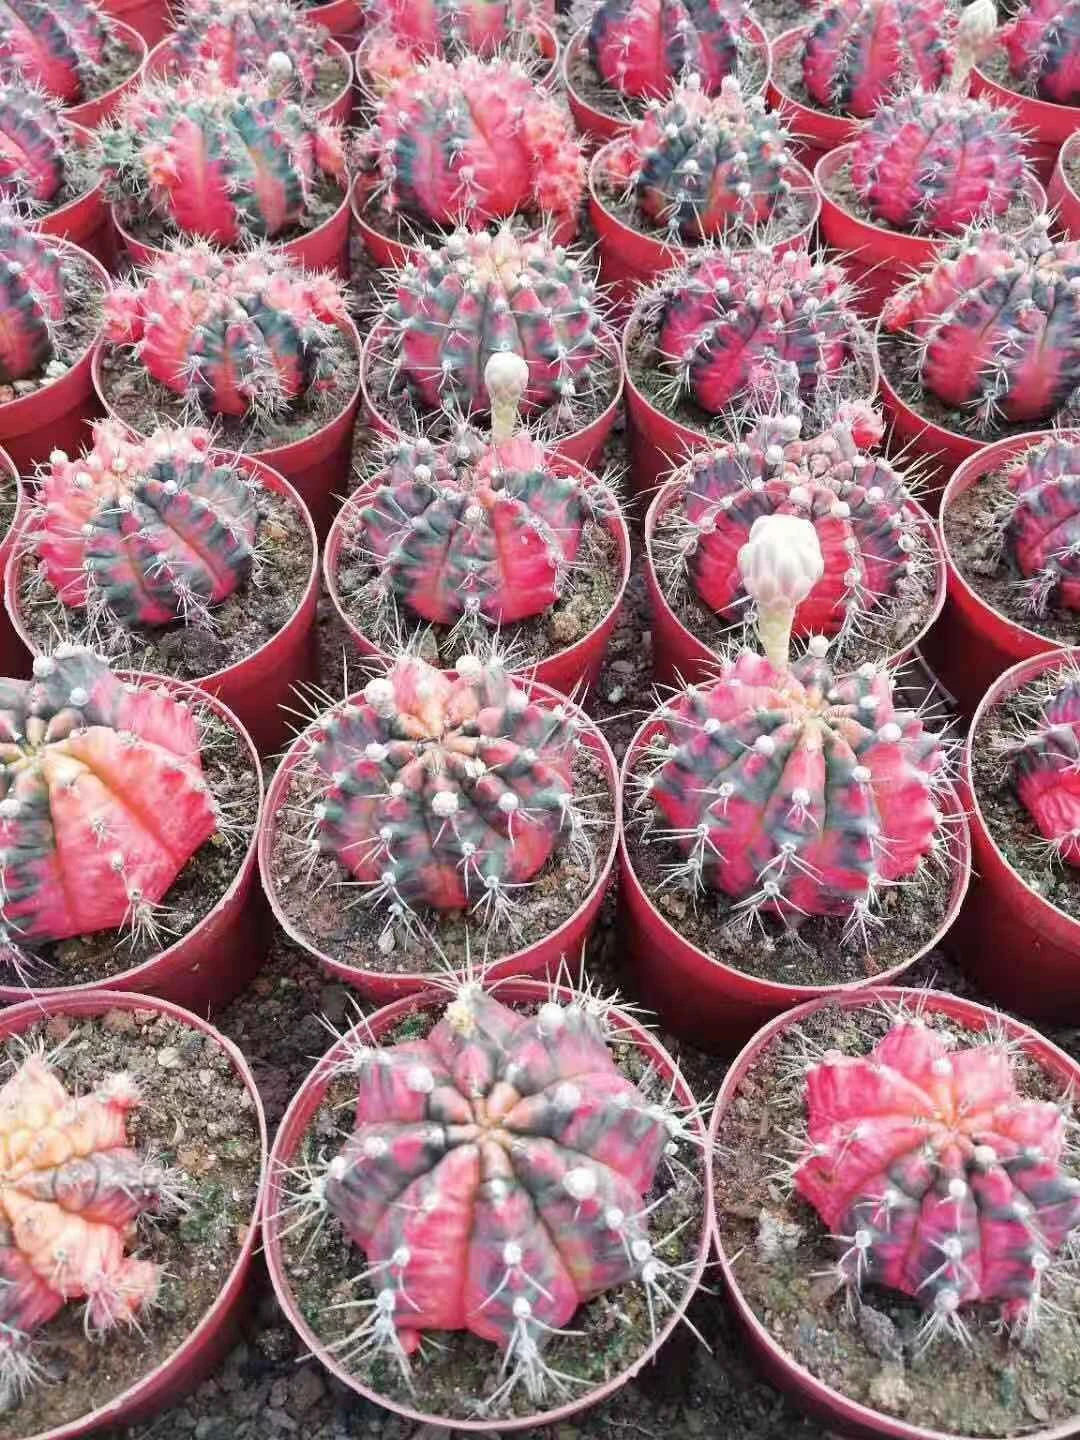 live succulent plants colorful moon cactus Gymnocalycium mihanovichii